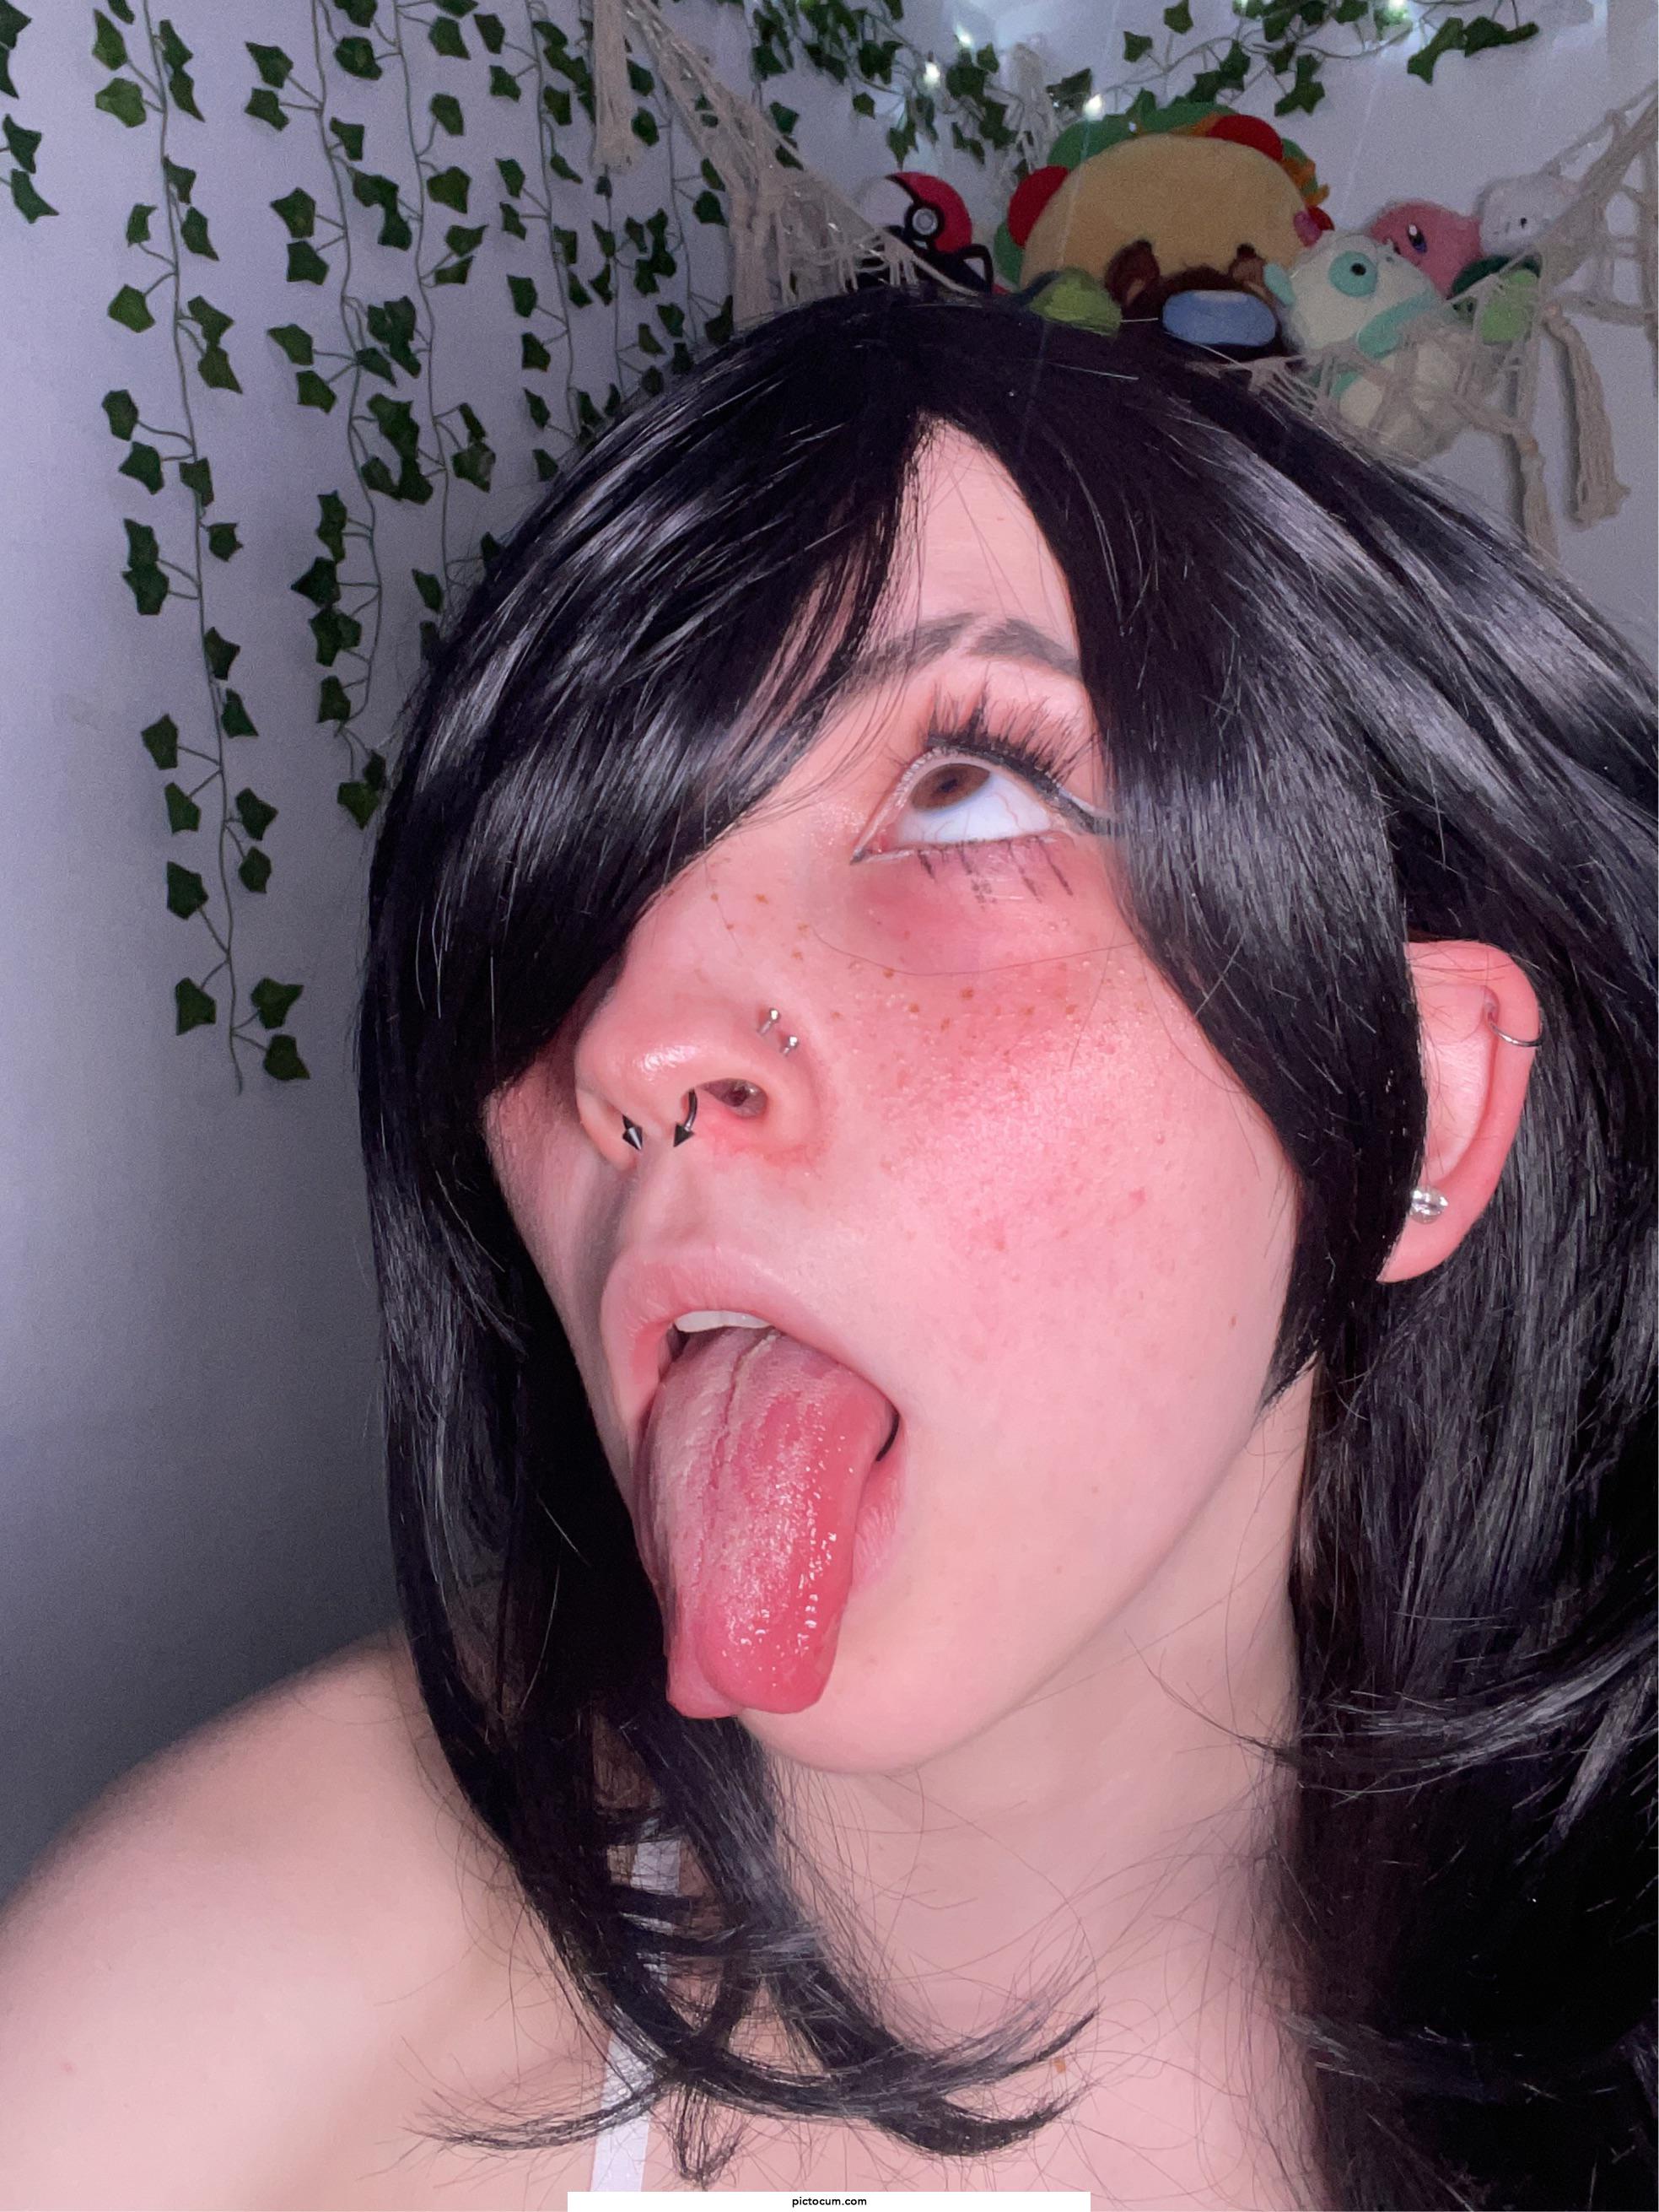 my tongue looks like a butt